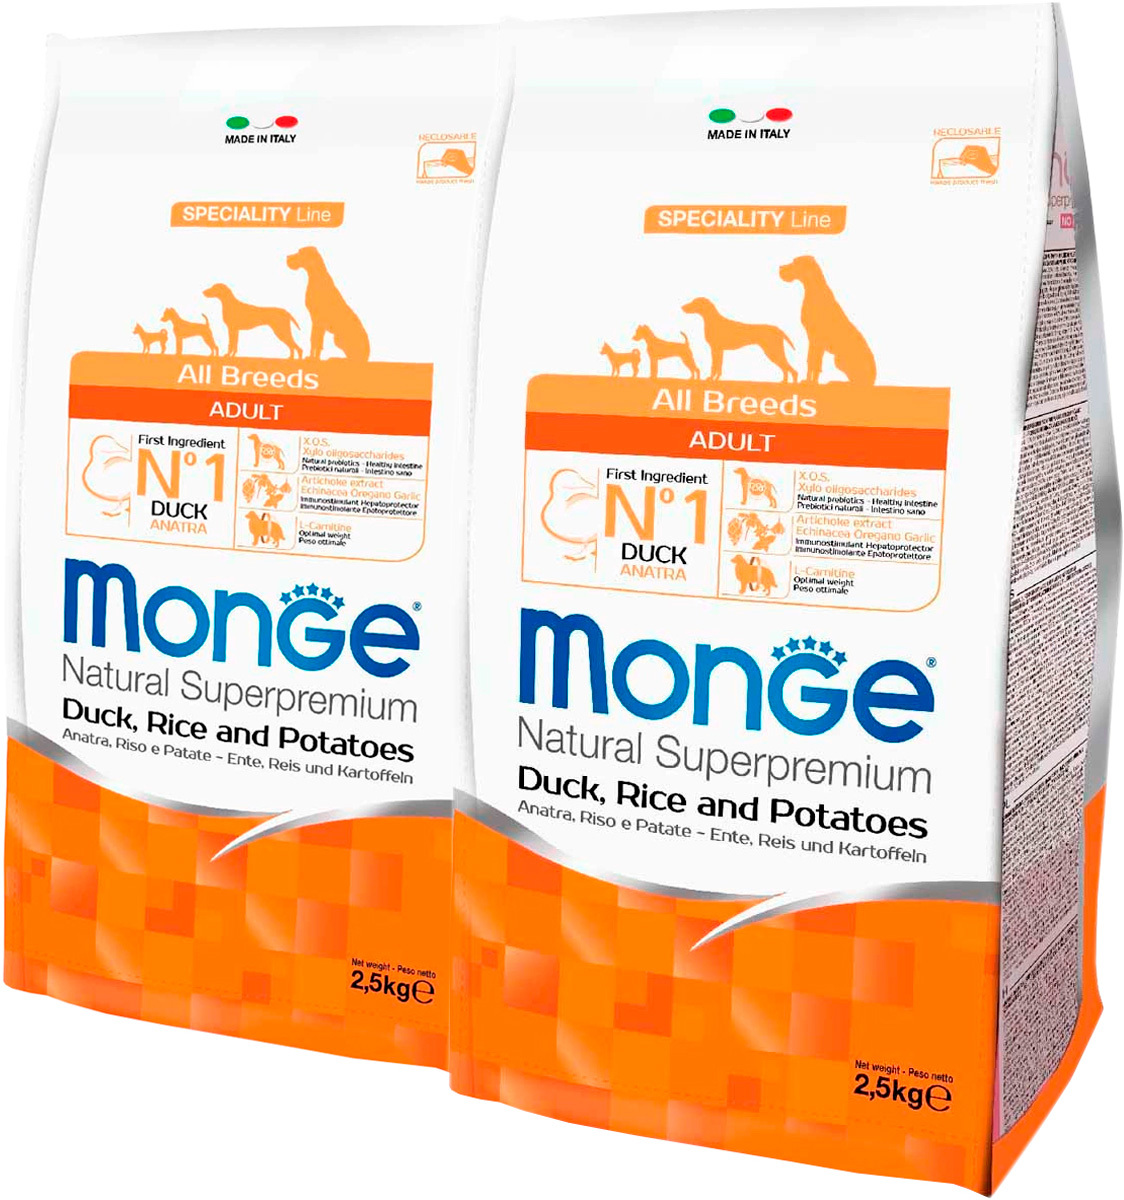 Сухой корм для собак монже. Сухой корм Monge Extra small. Monge Speciality line Puppy & Junior Salmon. Monge Speciality line корм для собак. Корм для собак премиум класса Монже.